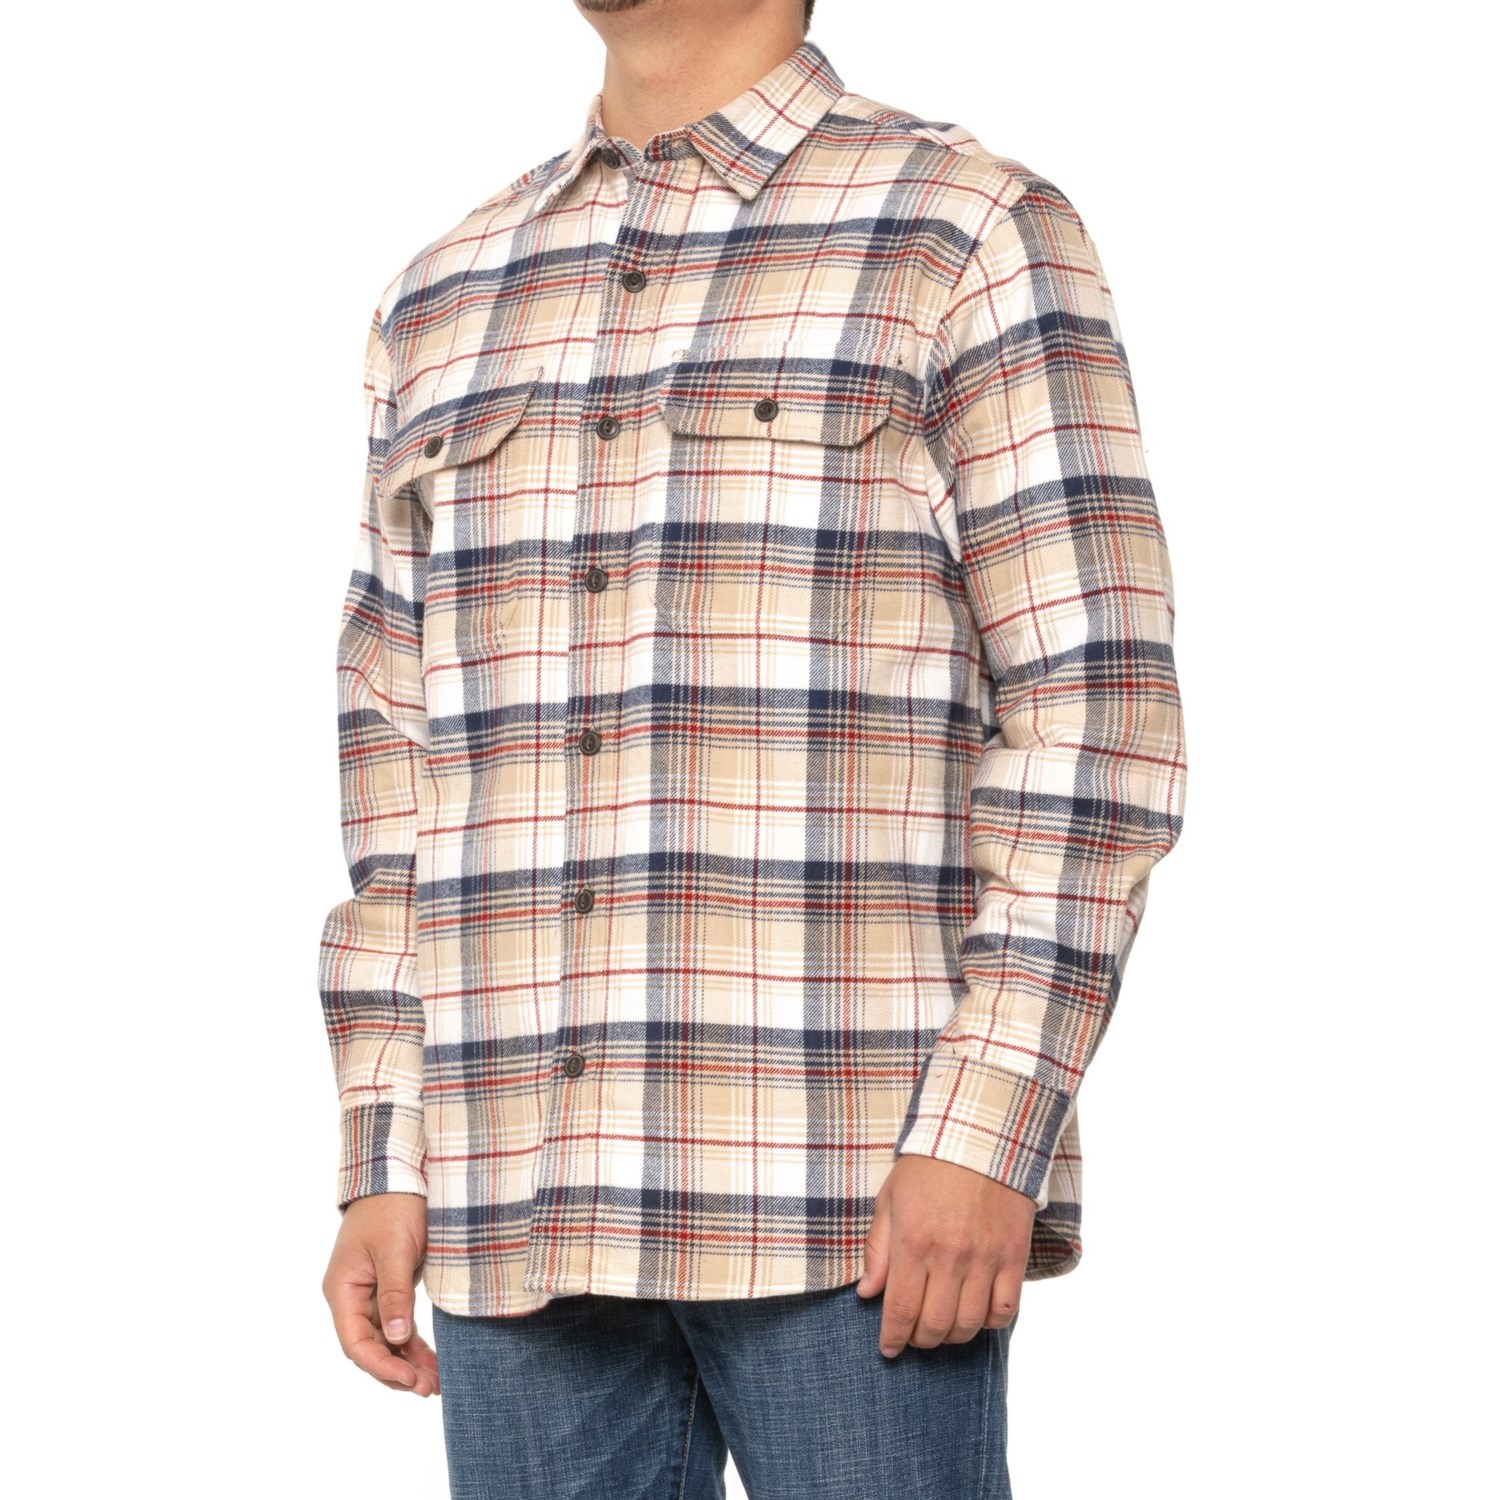 Swiss Alps Heavyweight Flannel Shirt - Long Sleeve - Save 41%